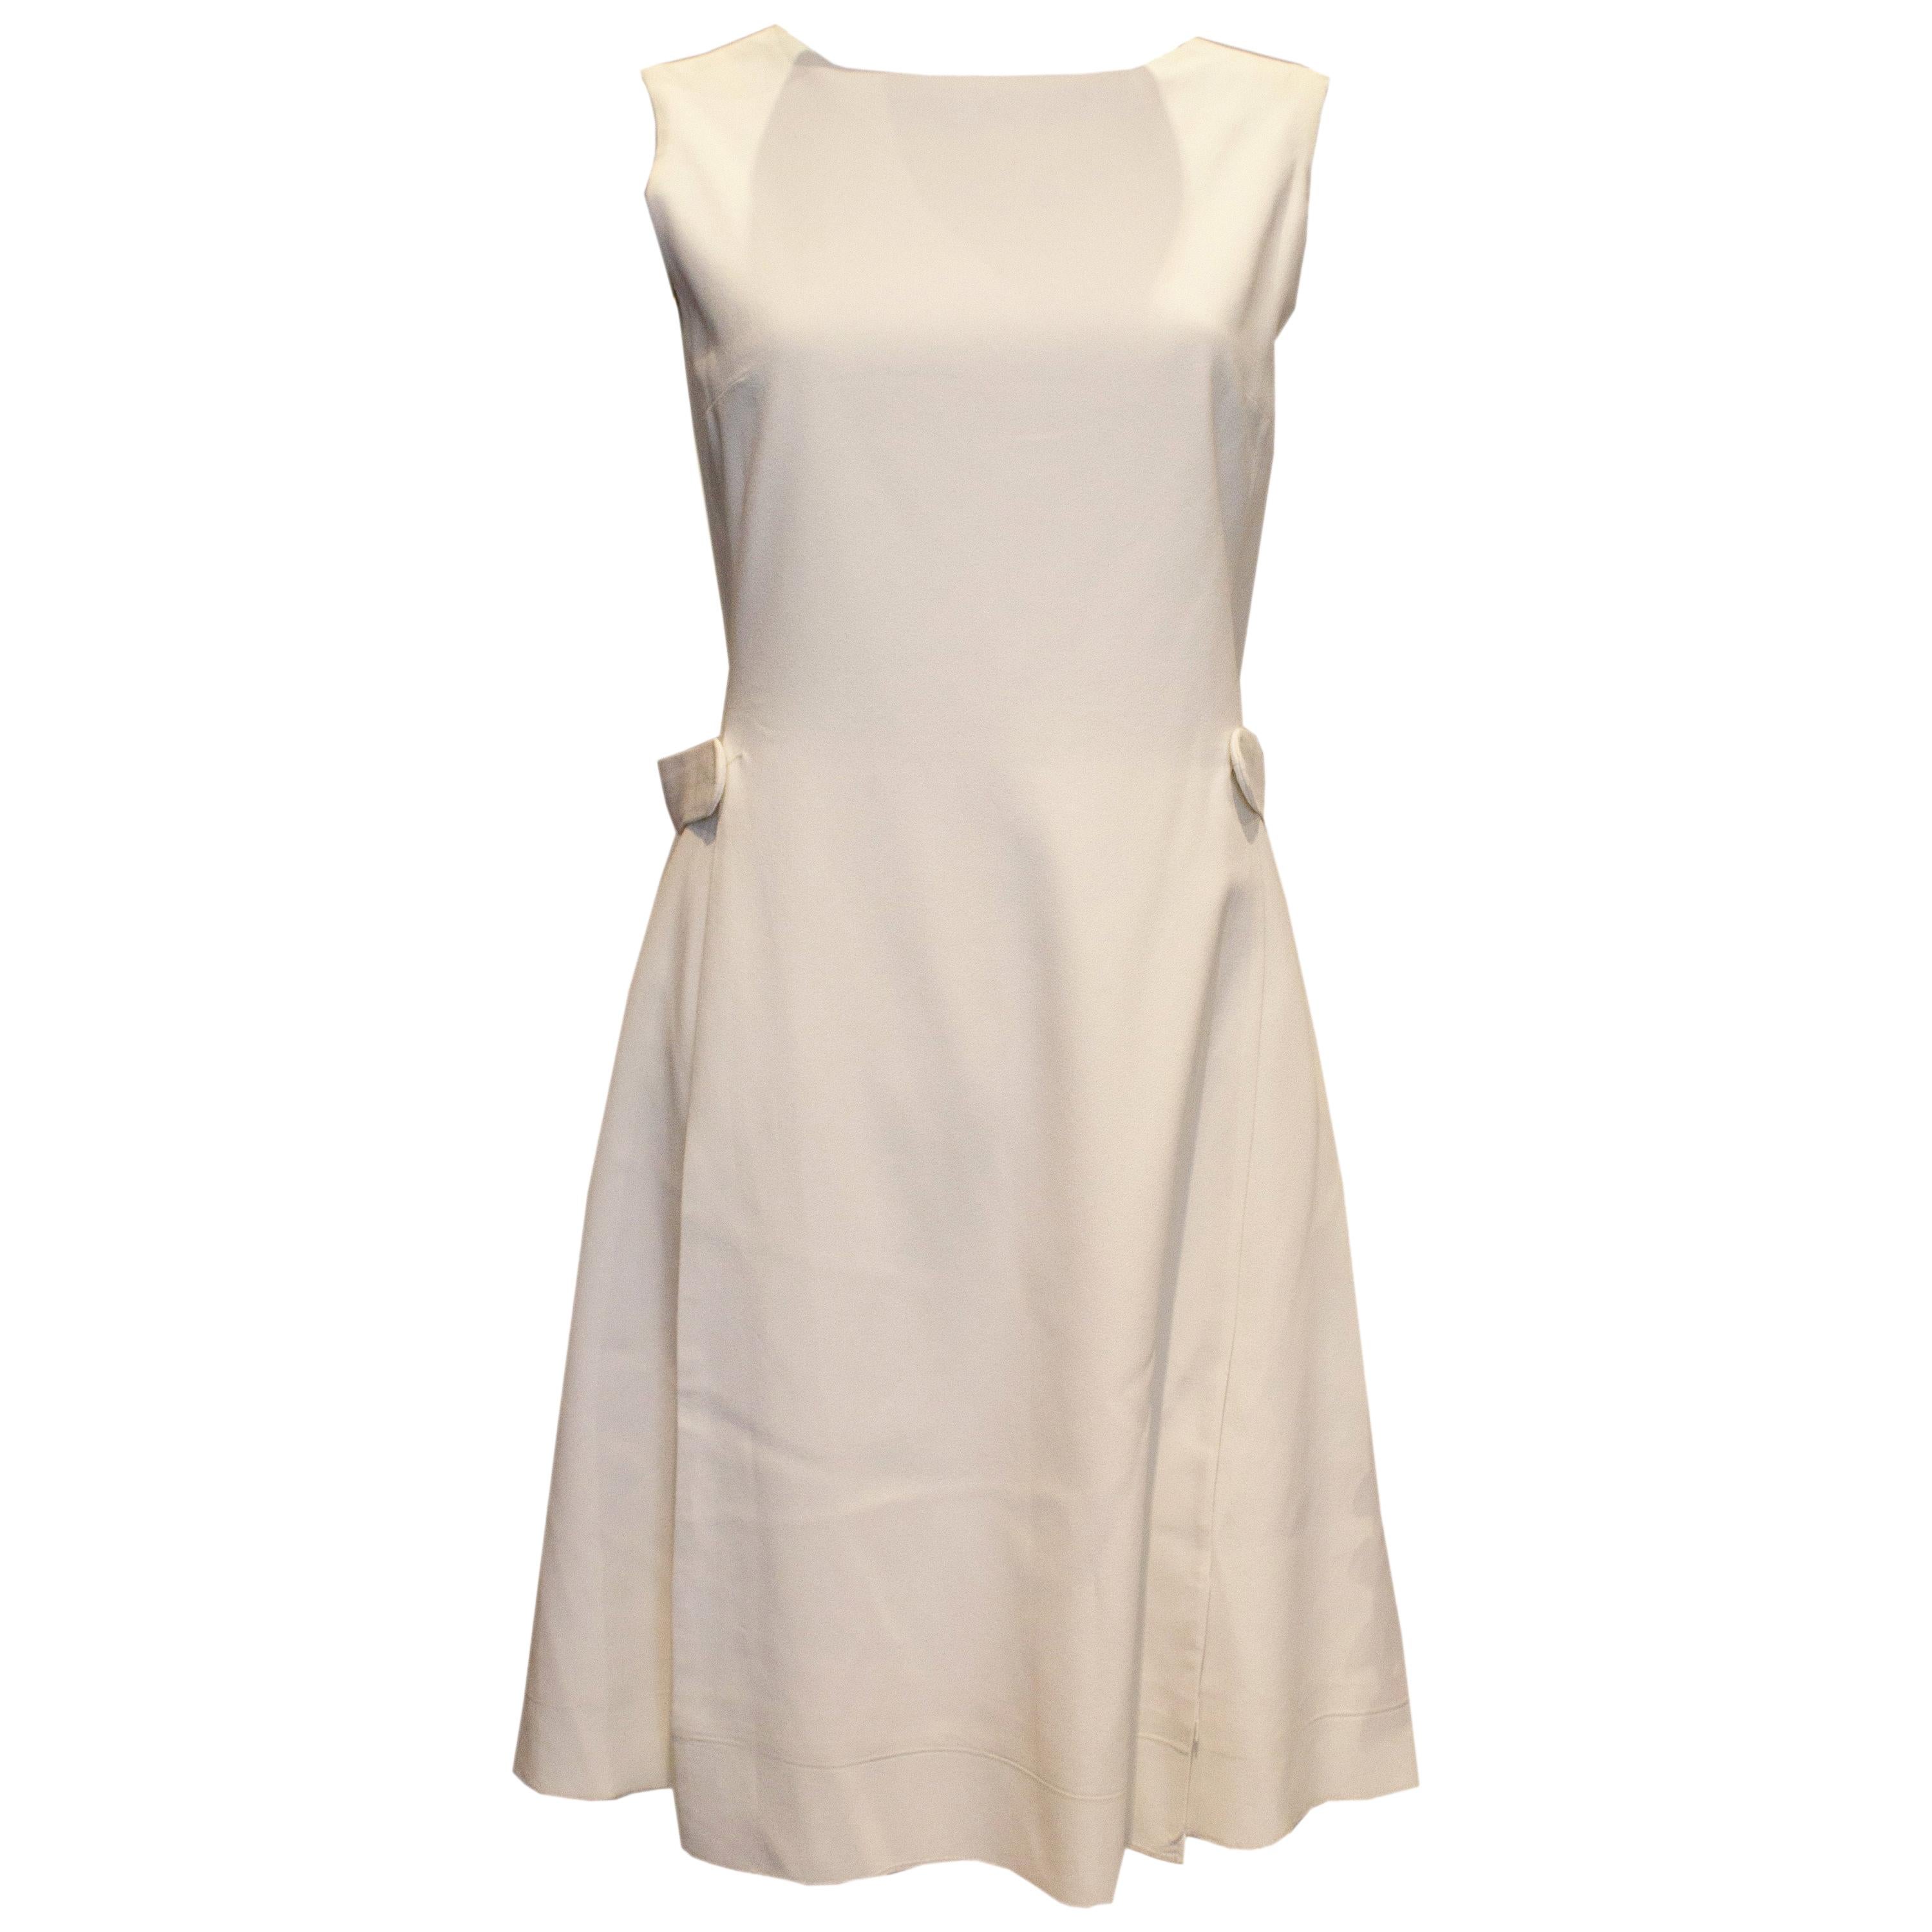 Vintage black and white printed dress flap dress size 6 soft chiffon dress vintage cotton dress tea length dress